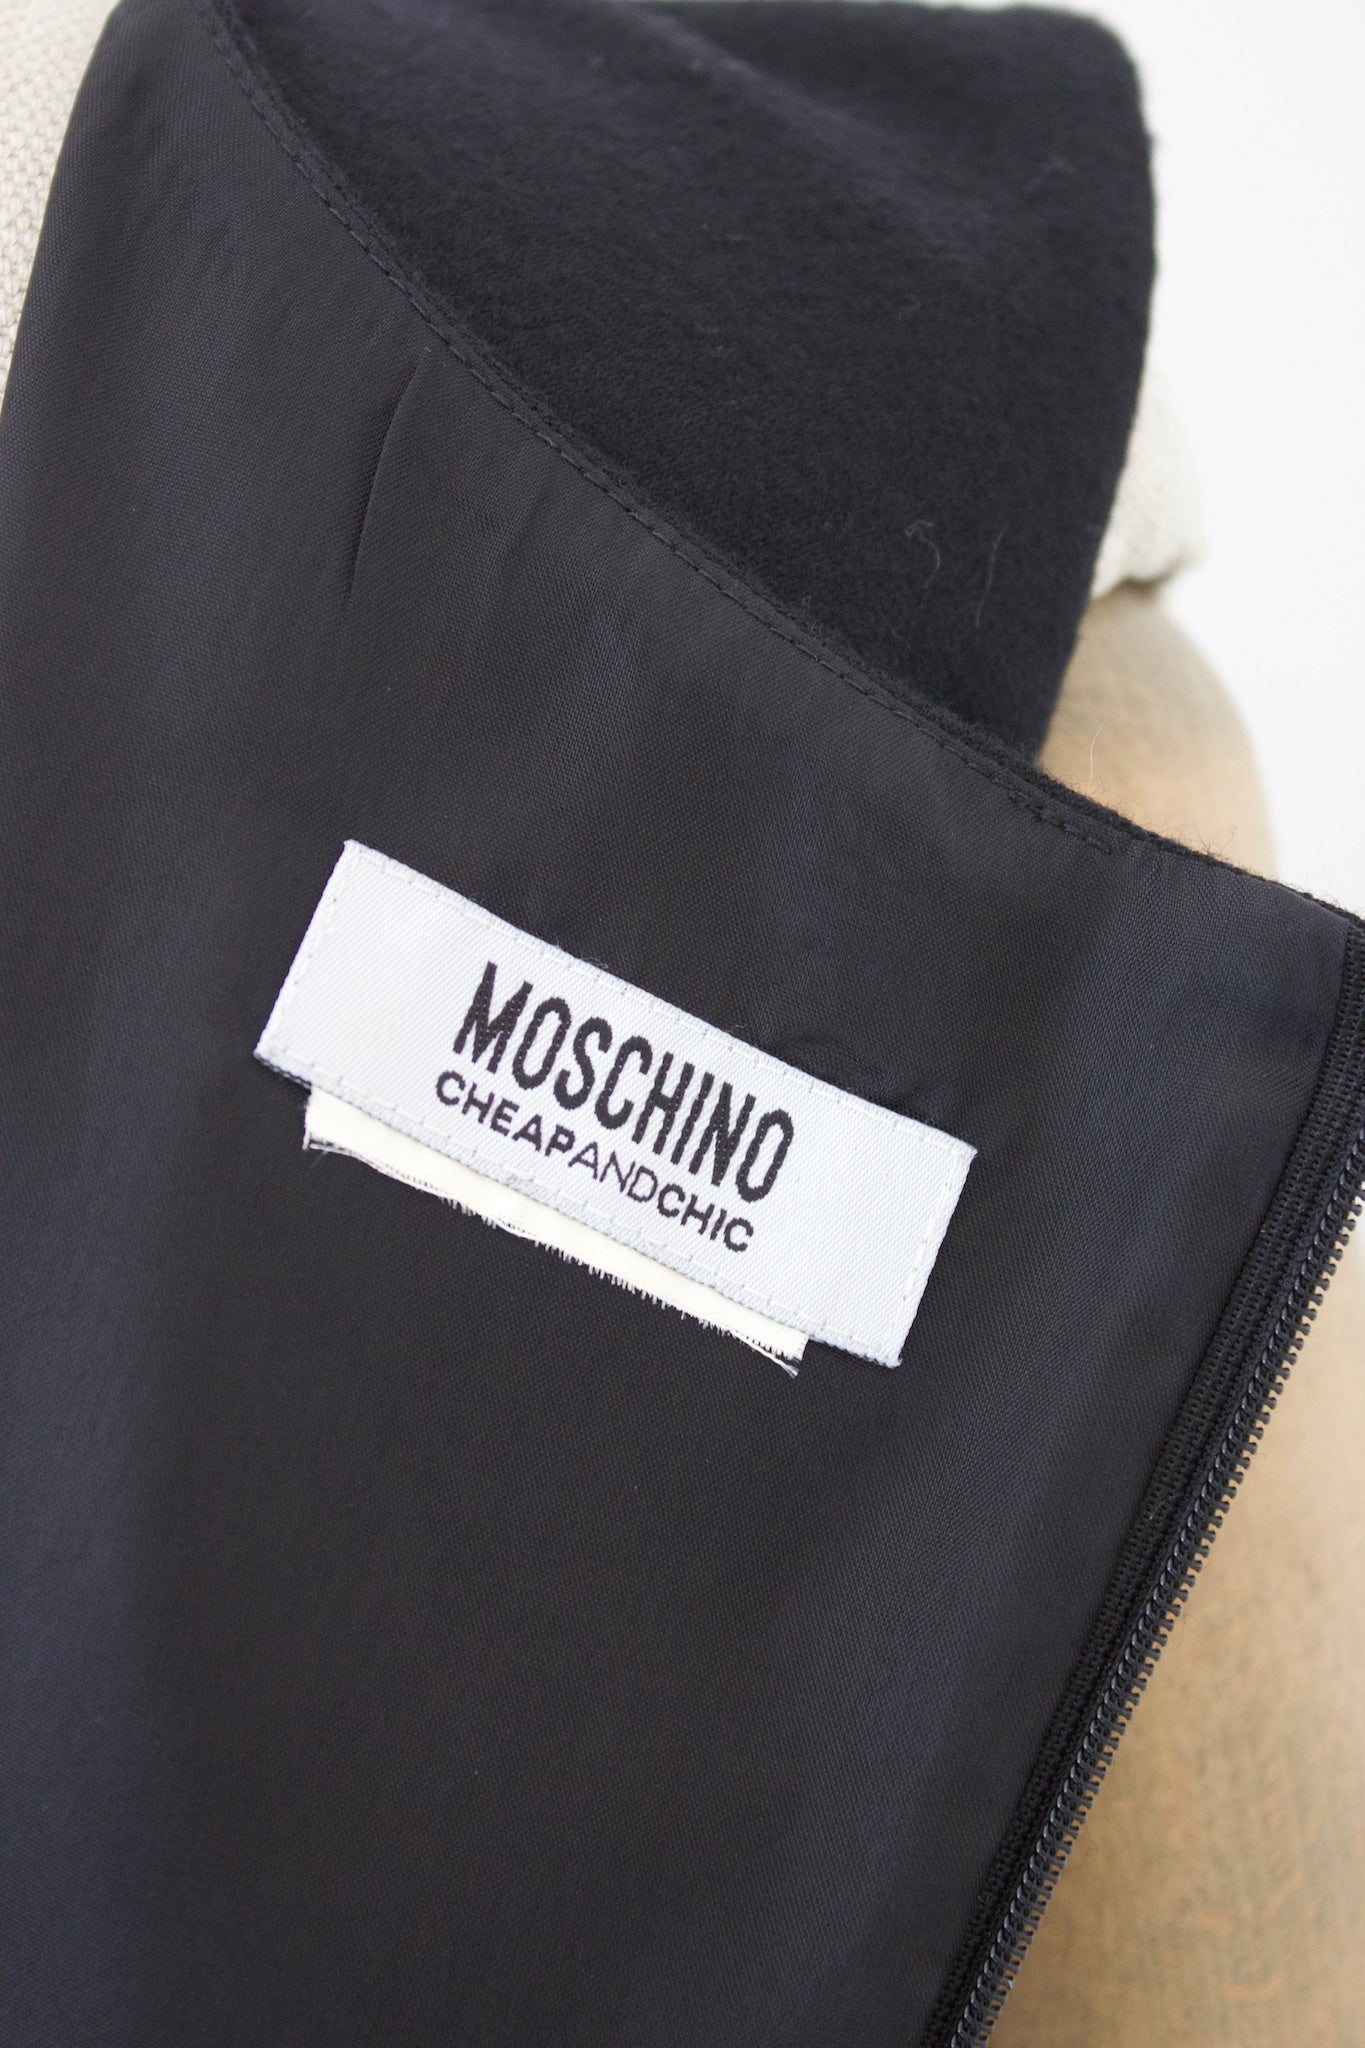 Moschino Black Wool Vintage Sheath Dress Vintage 2000s